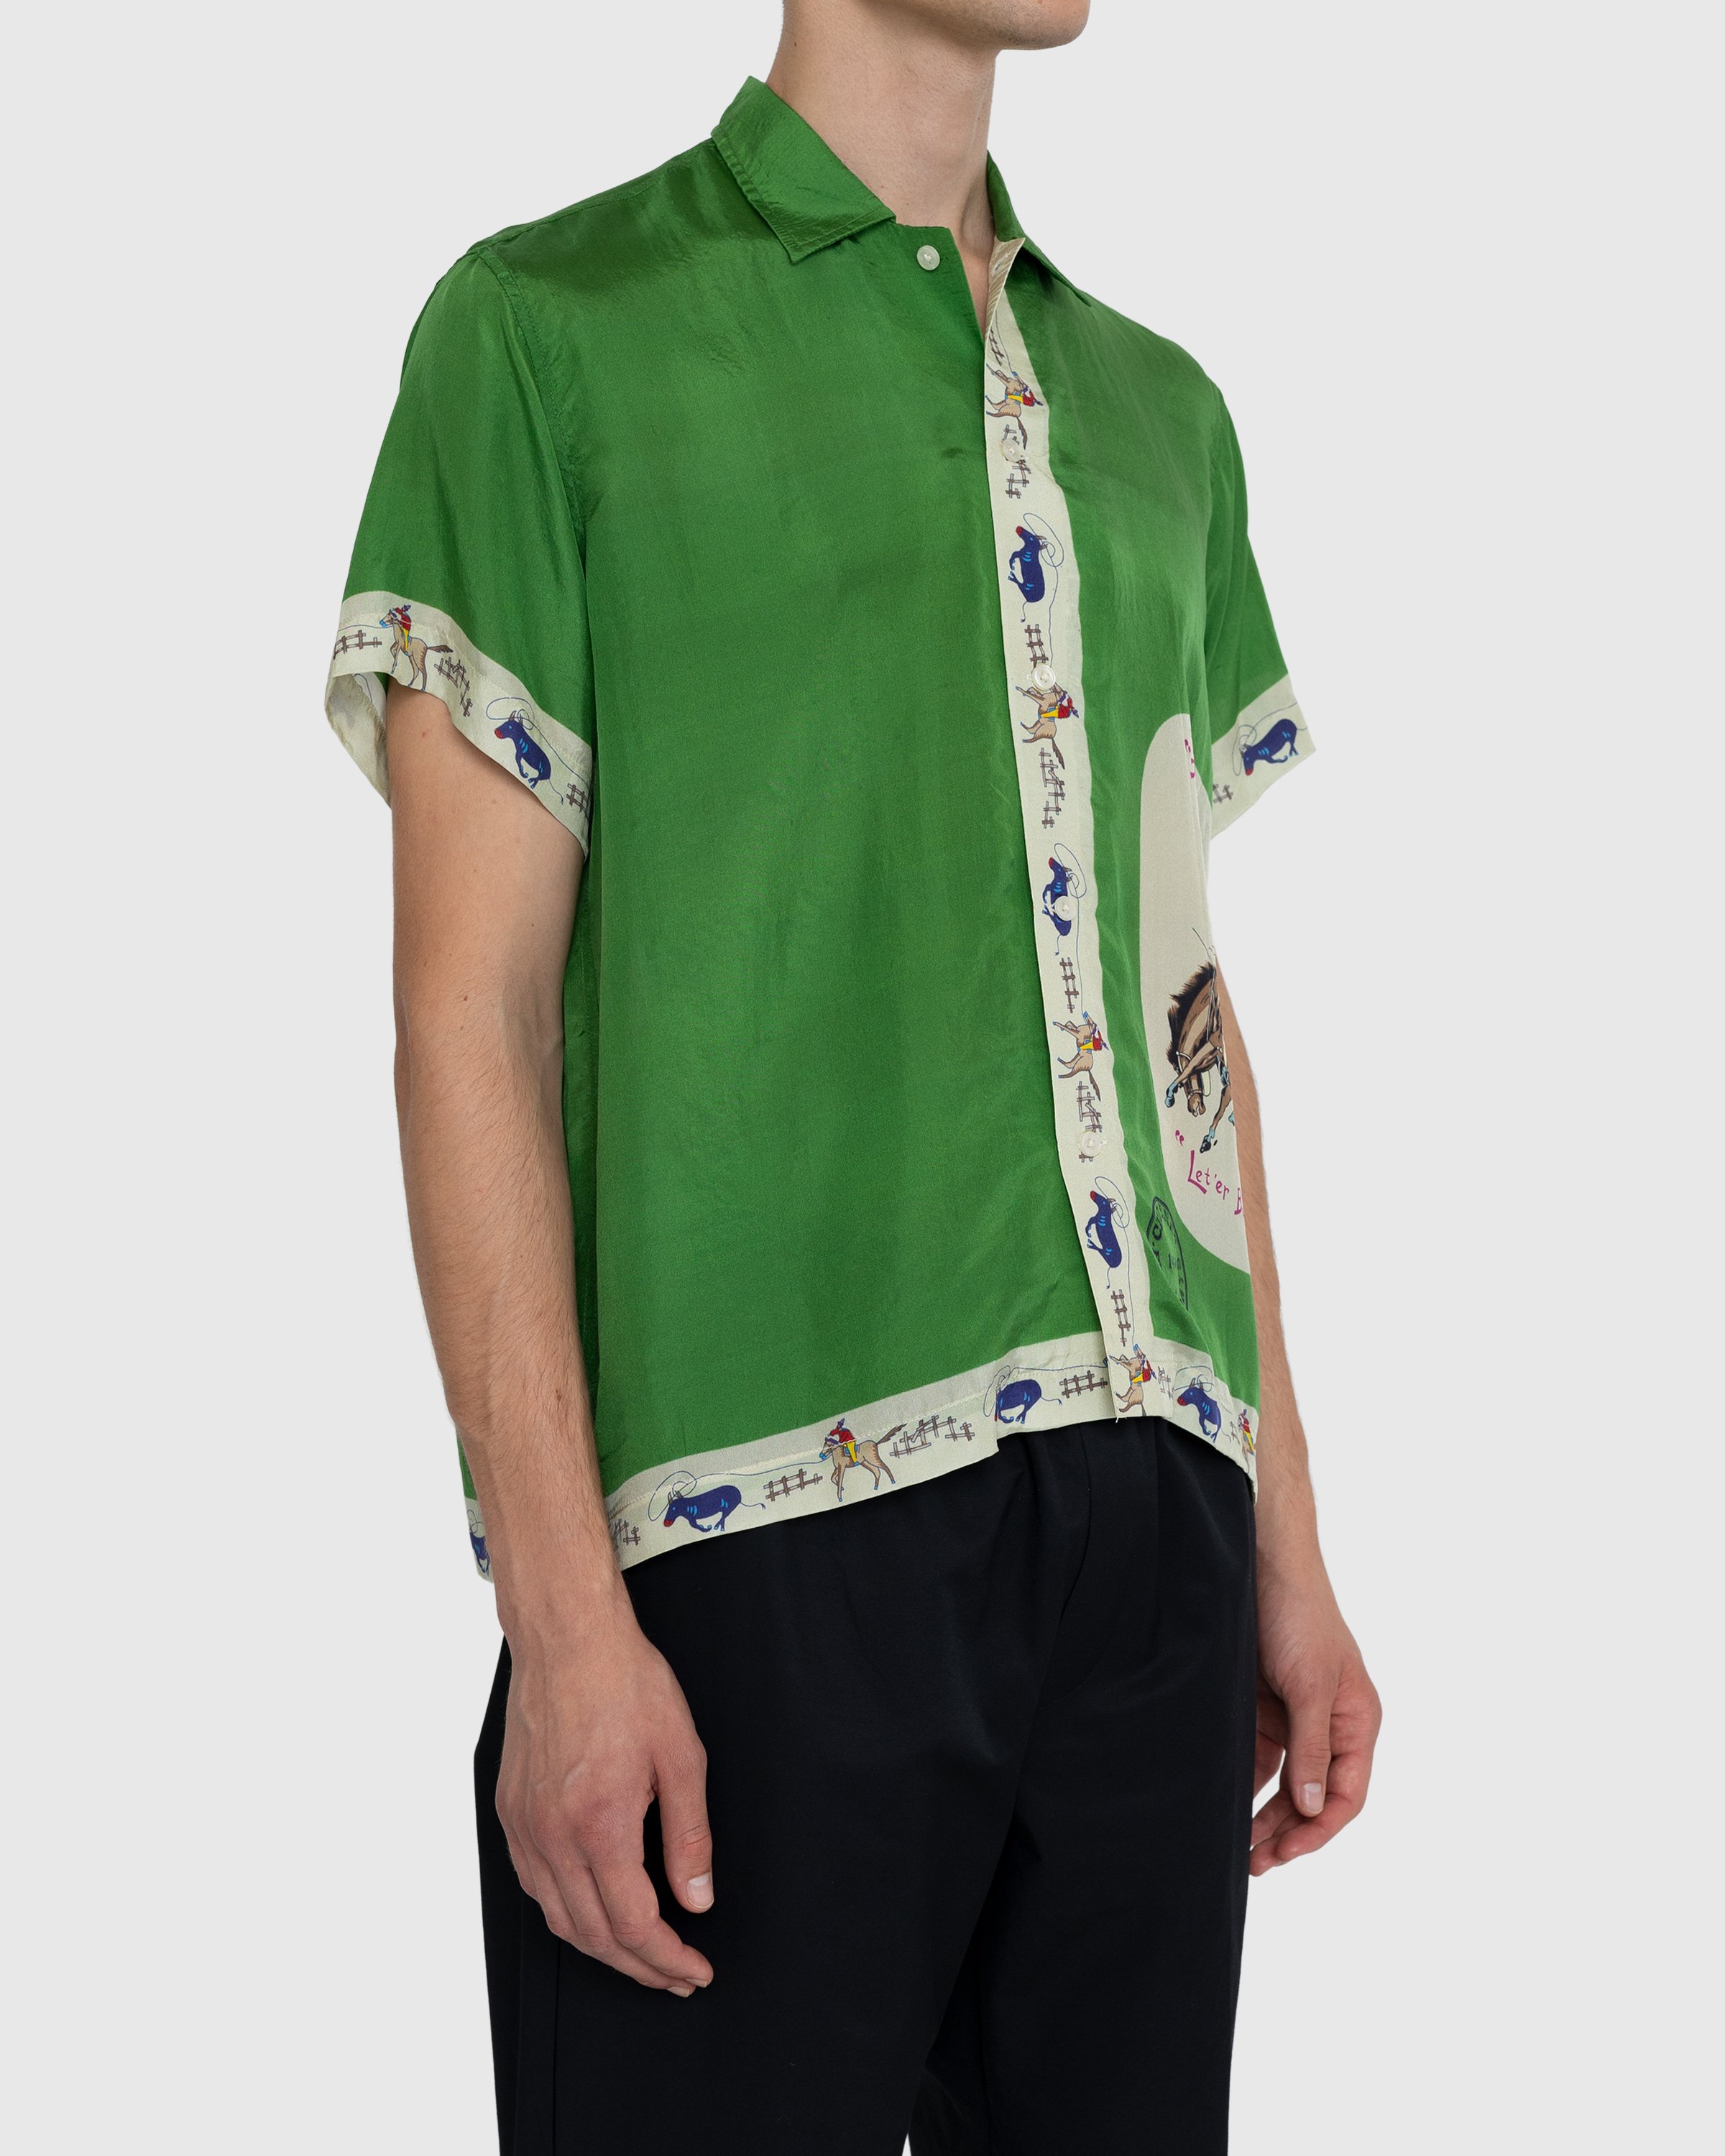 Bode - Round Up Short-Sleeve Shirt Green - Clothing - Green - Image 3